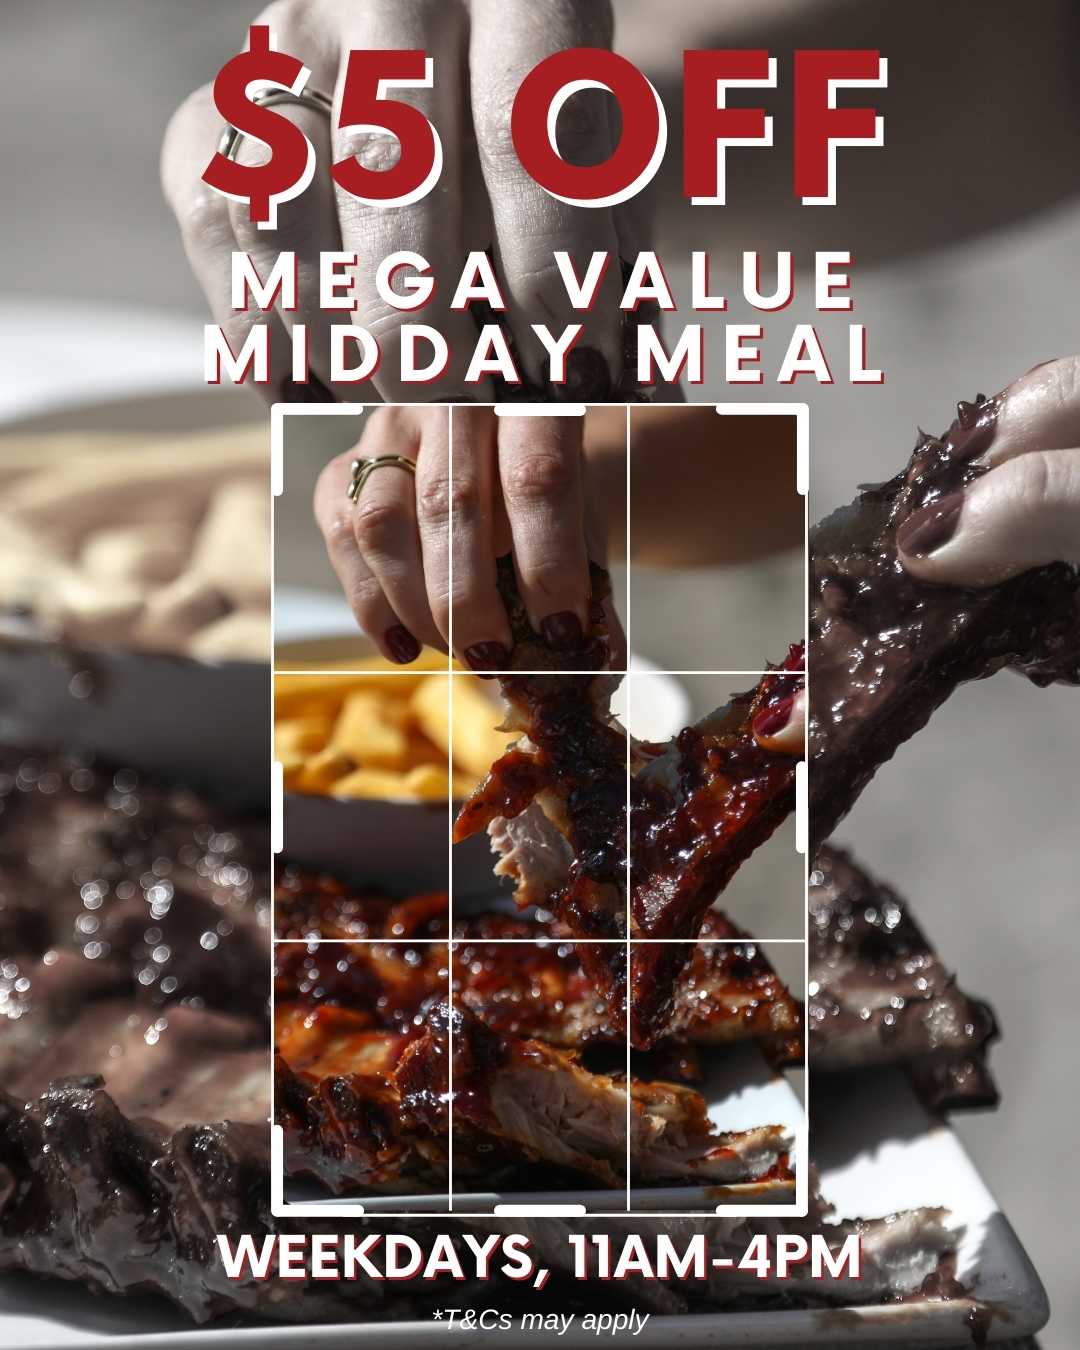 Morganfield's,Enjoy $5 off Mega Value Midday Meal